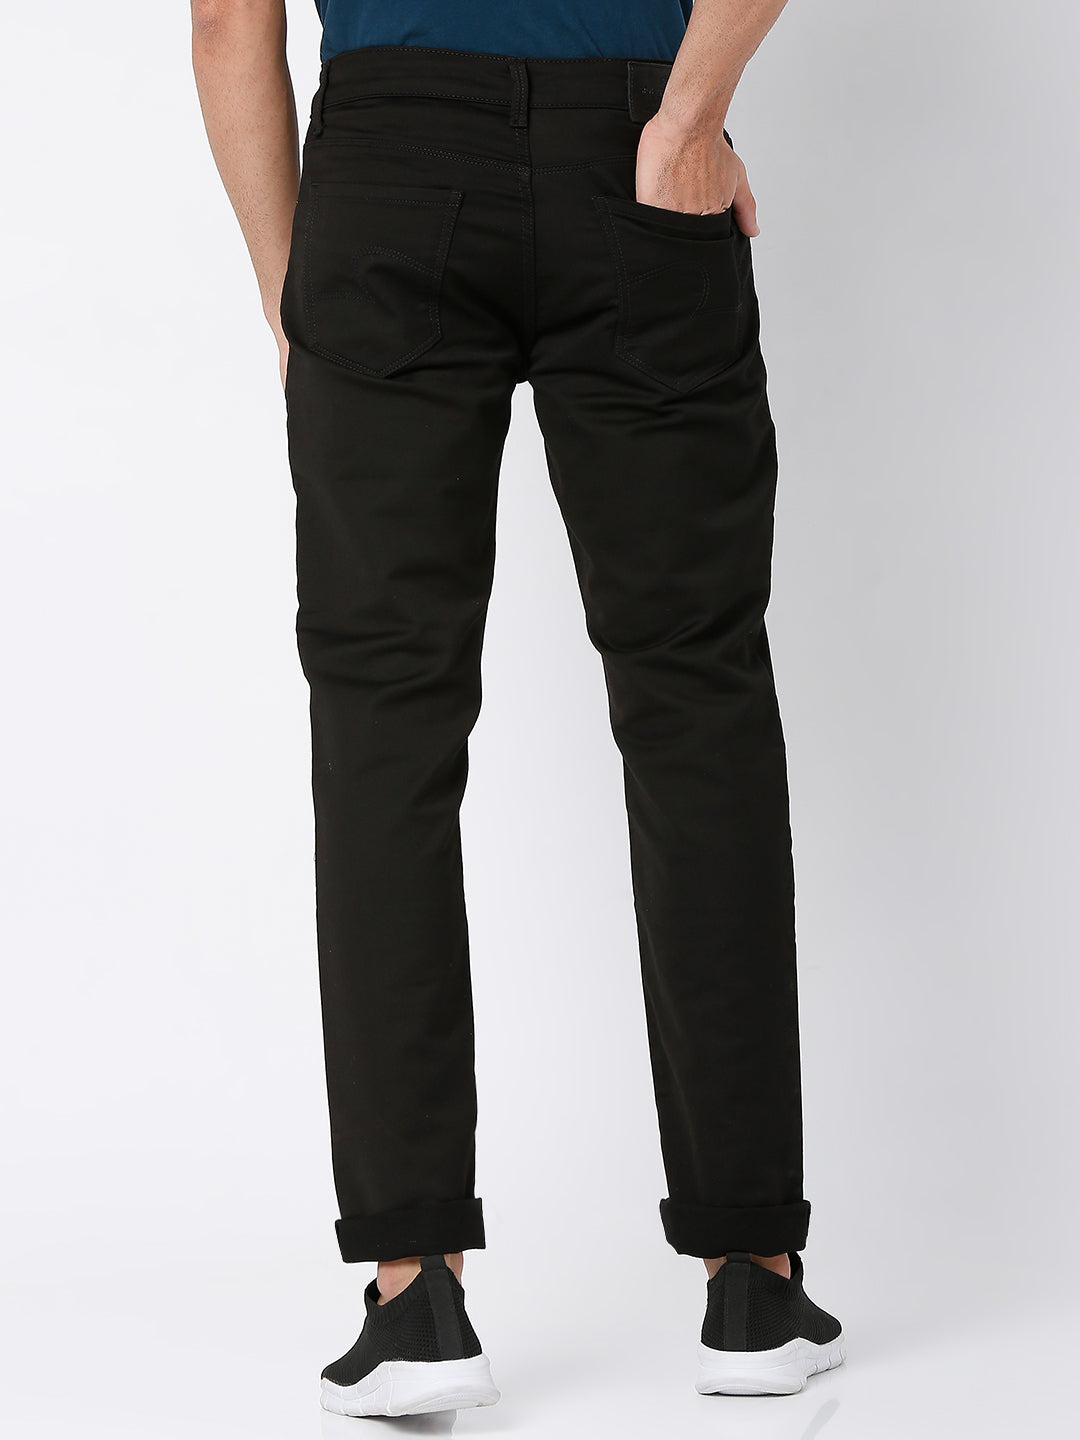 Spykar Black Cotton Comfort Fit Straight Length Jeans For Men (Ricardo)